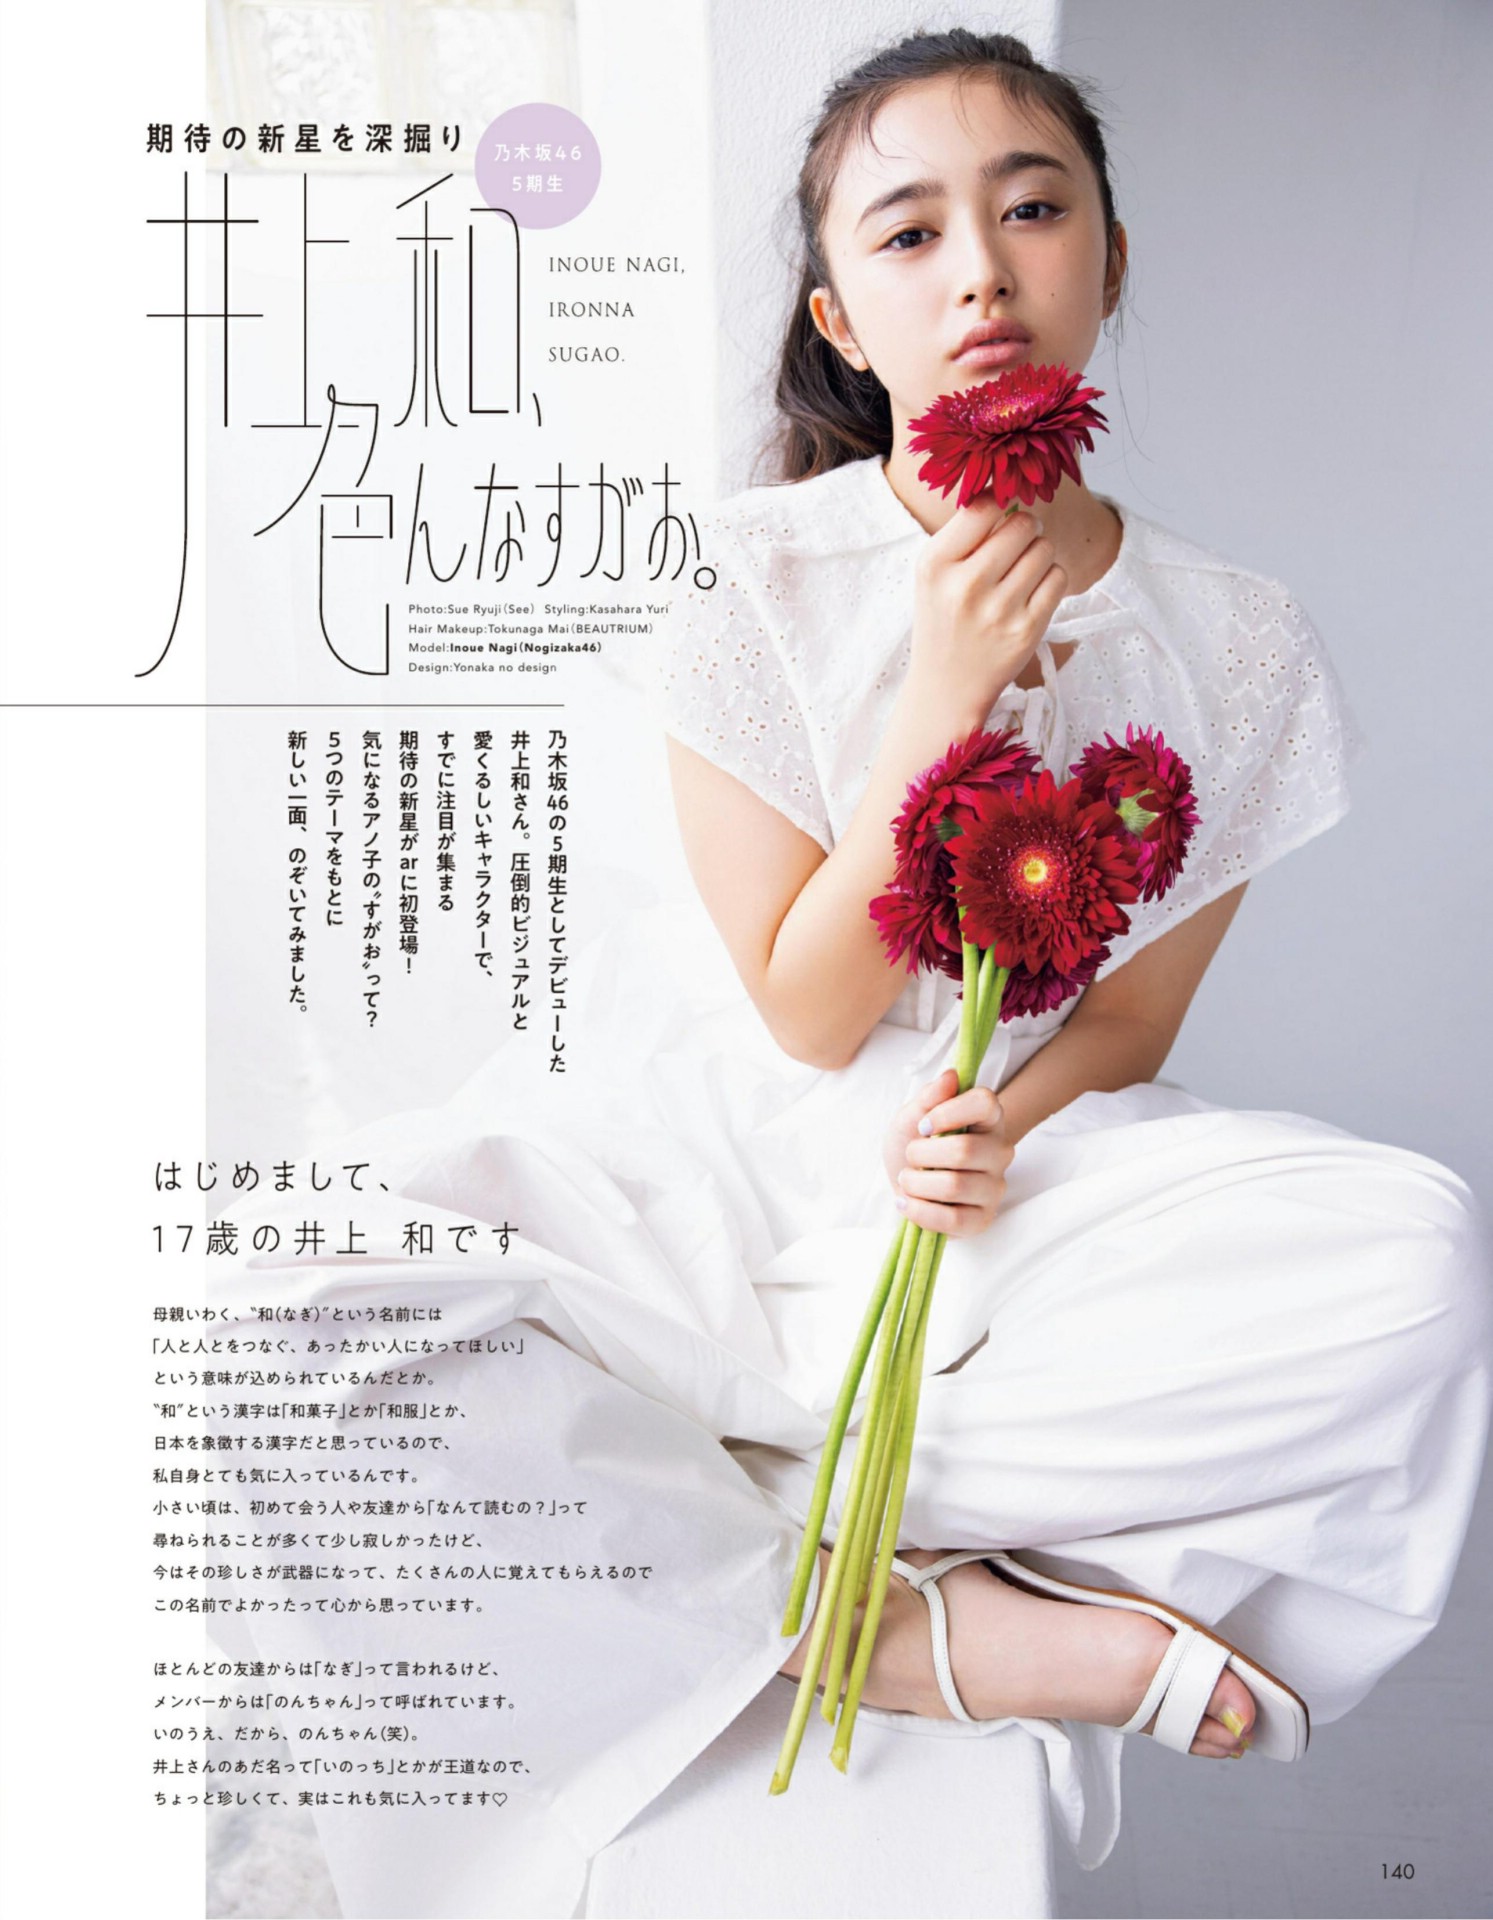 Nagi Inoue 井上和, aR (アール) Magazine 2022.09